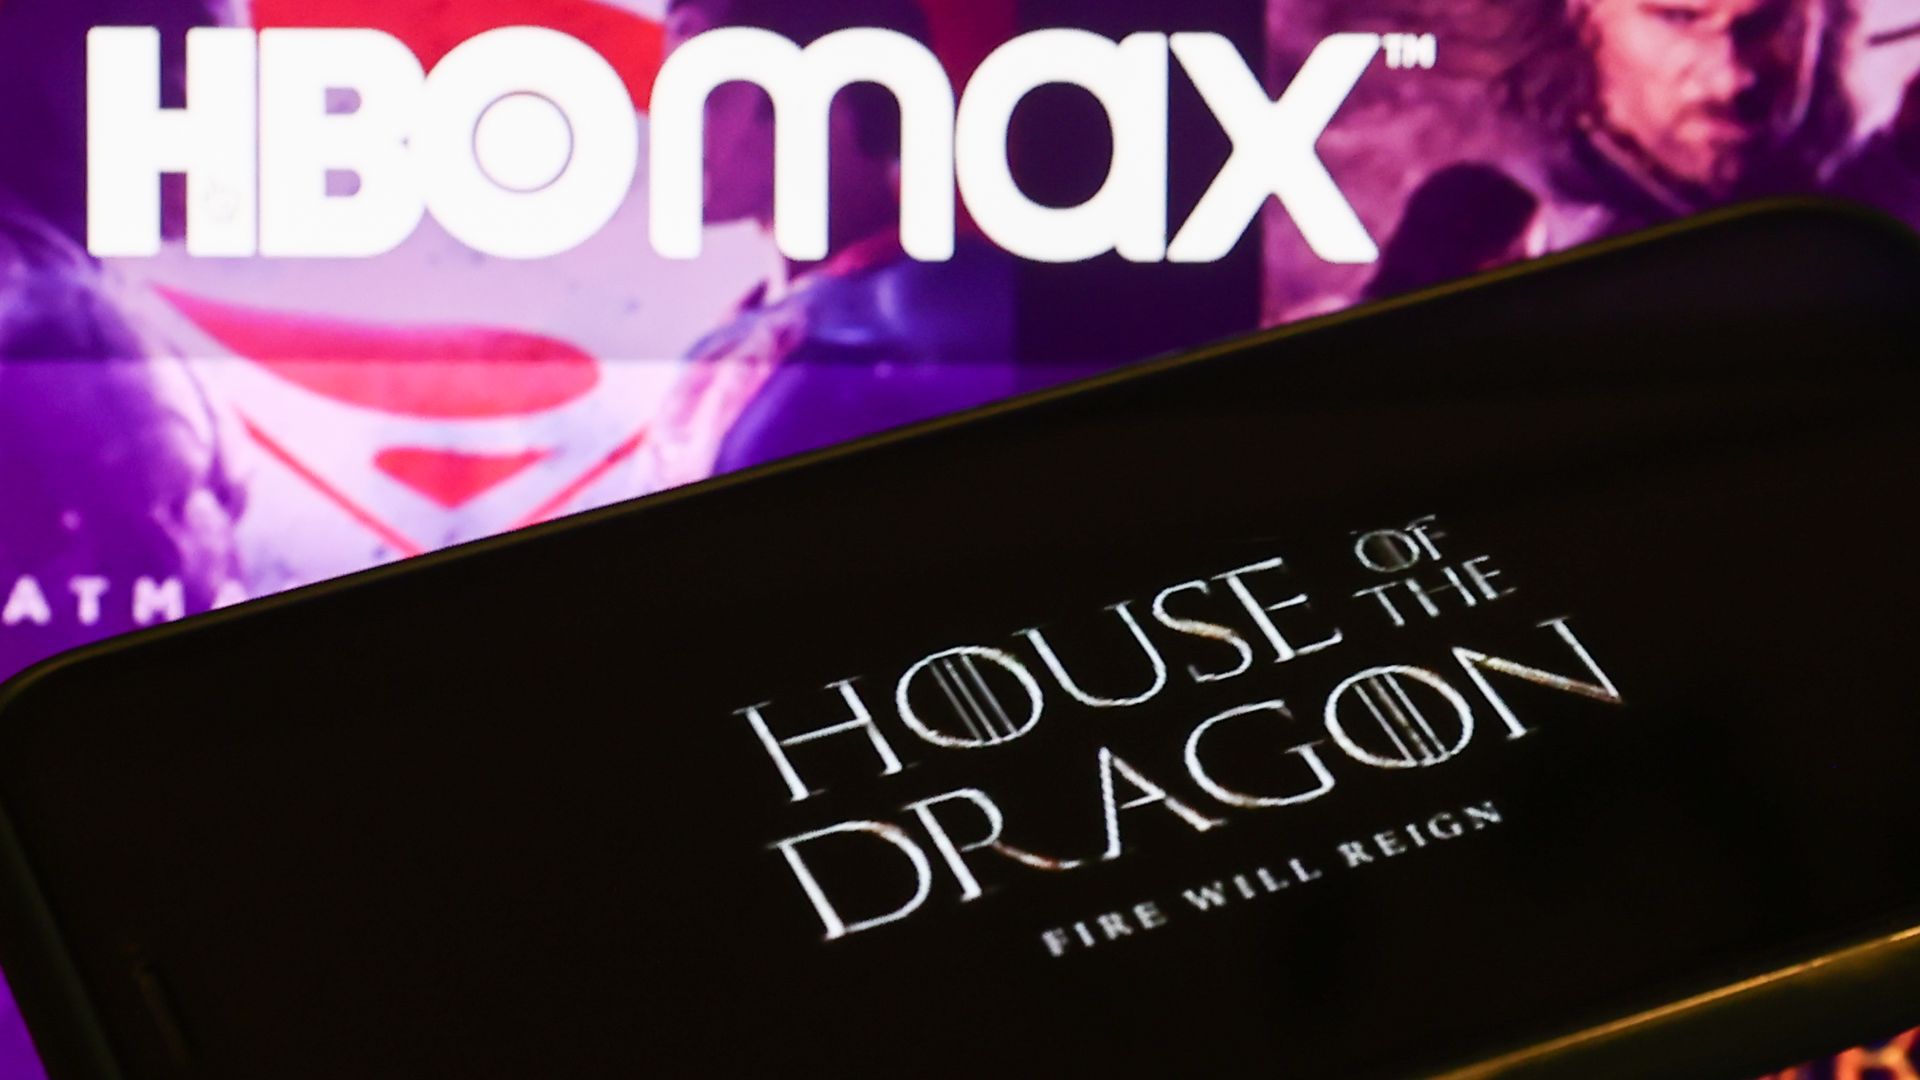 Game of Thrones: House of the Dragon ganha data de estreia para agosto